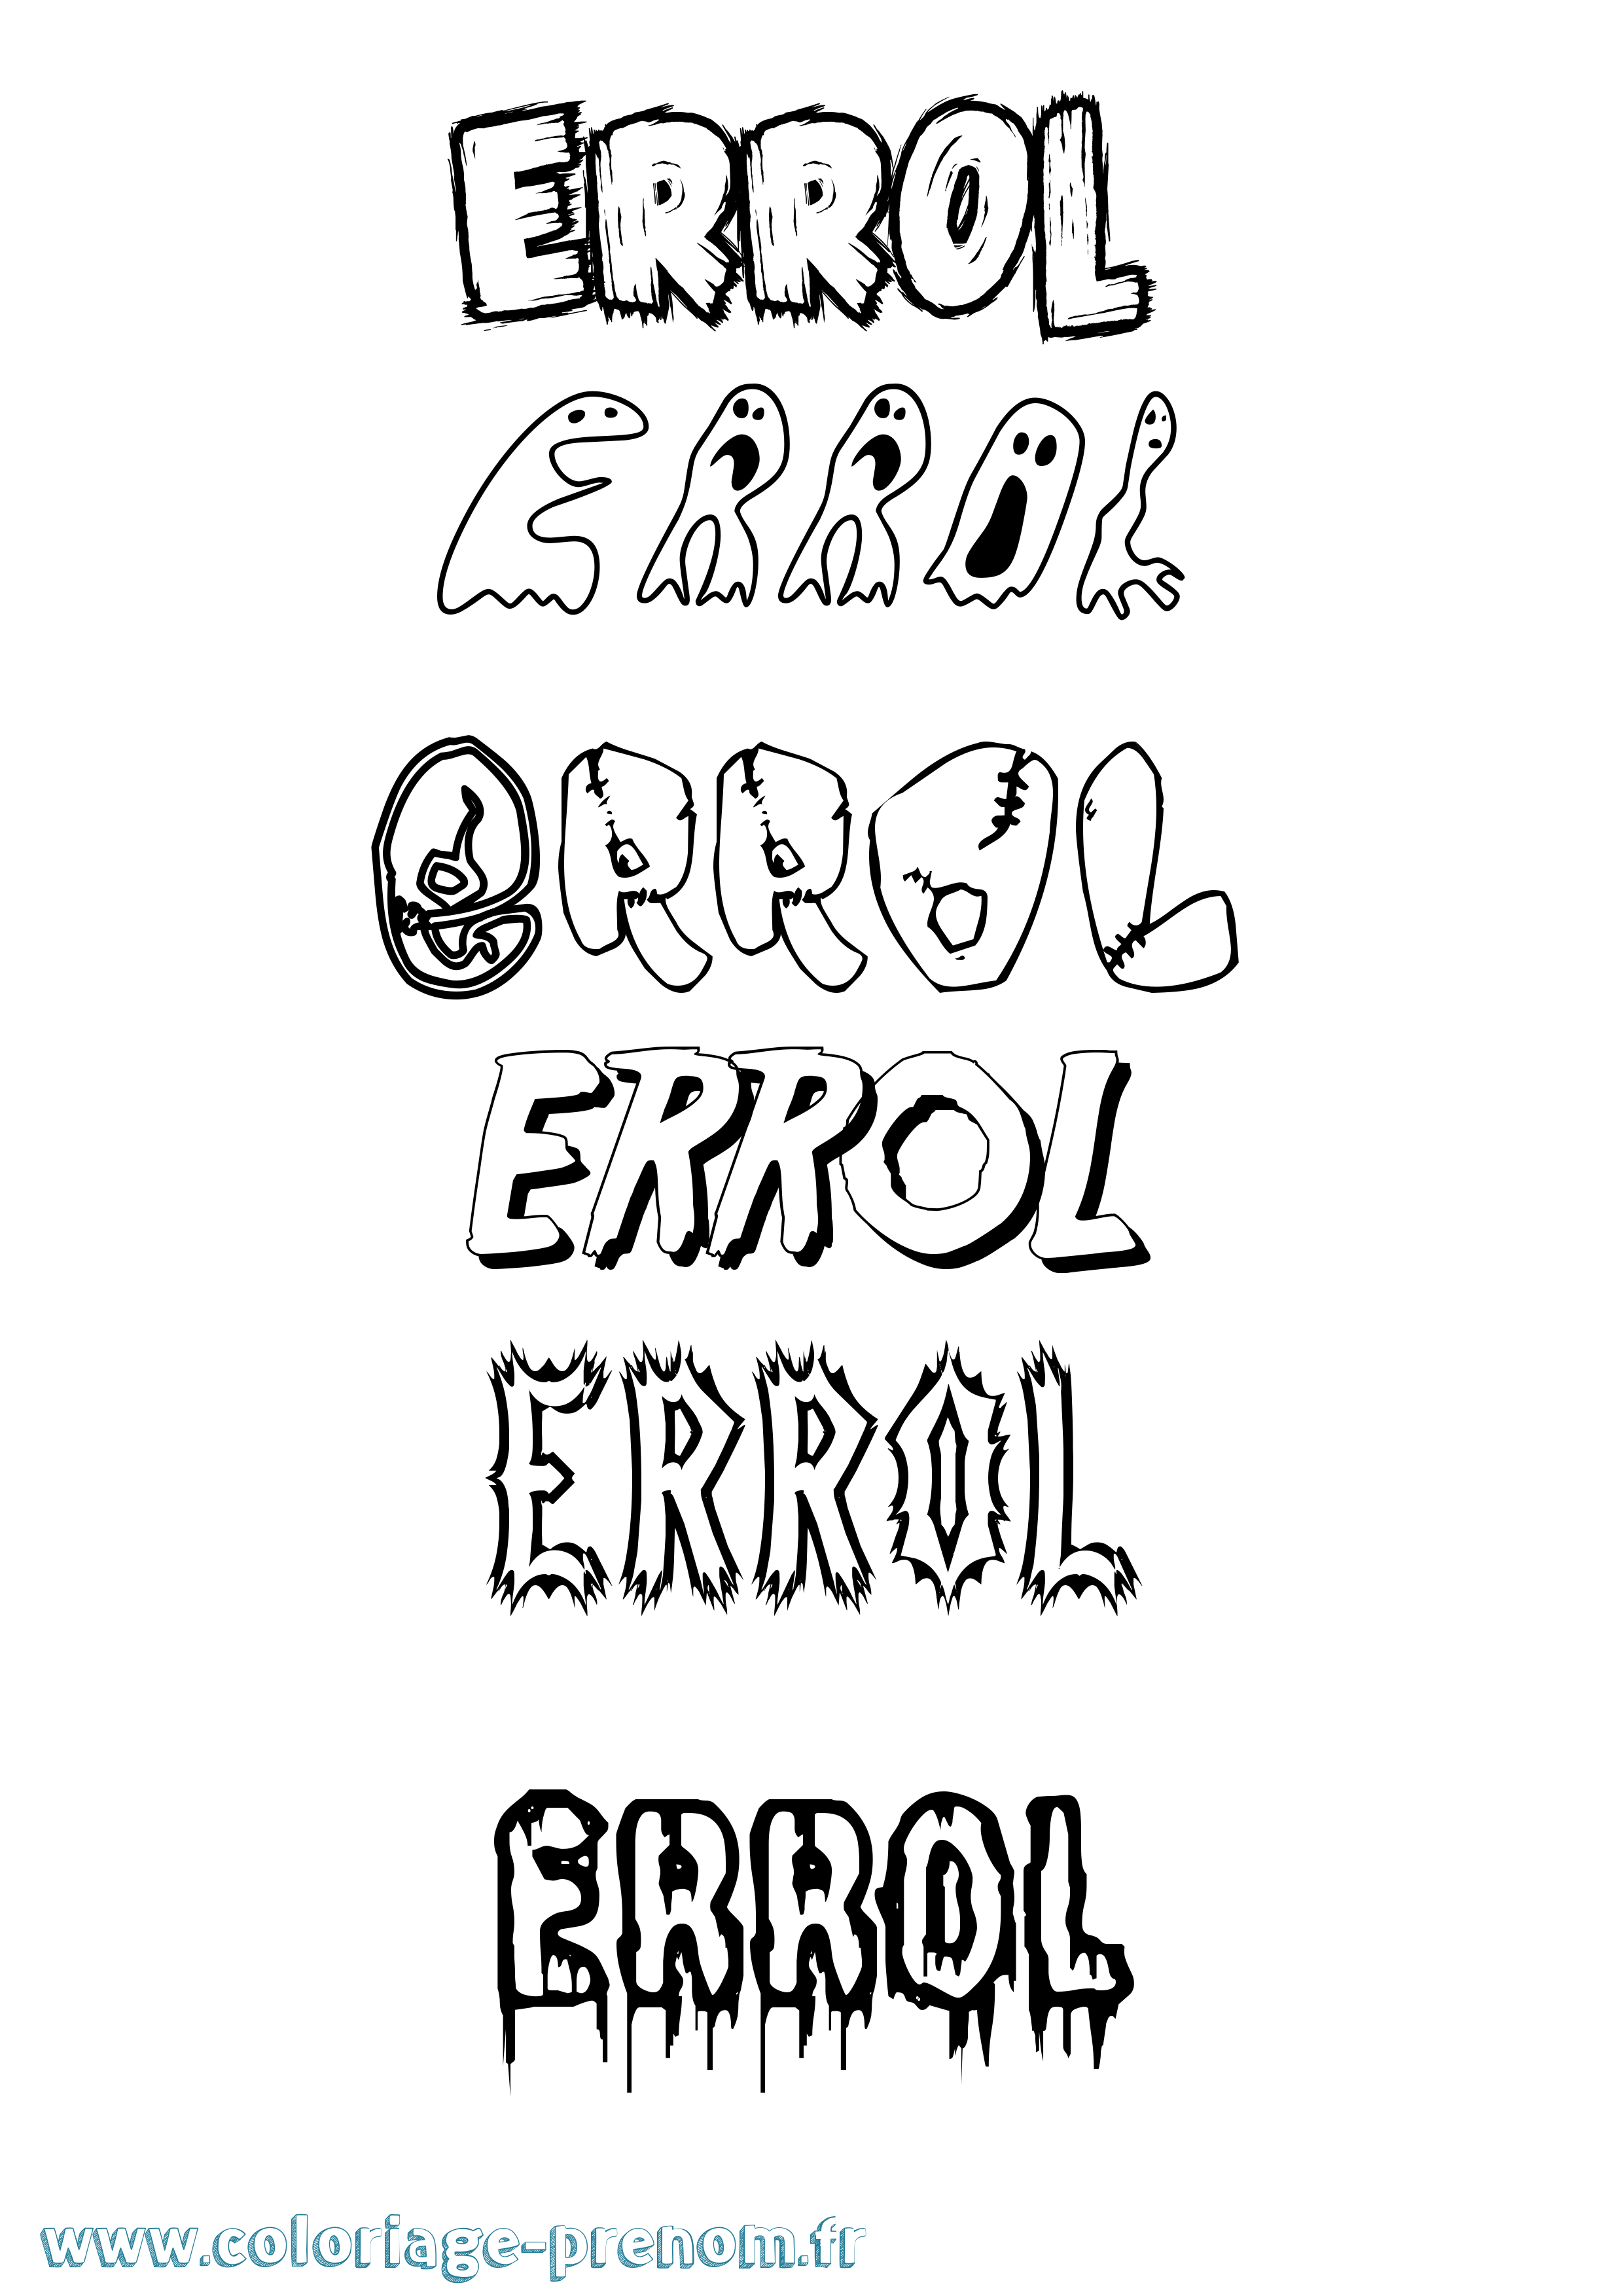 Coloriage prénom Errol Frisson